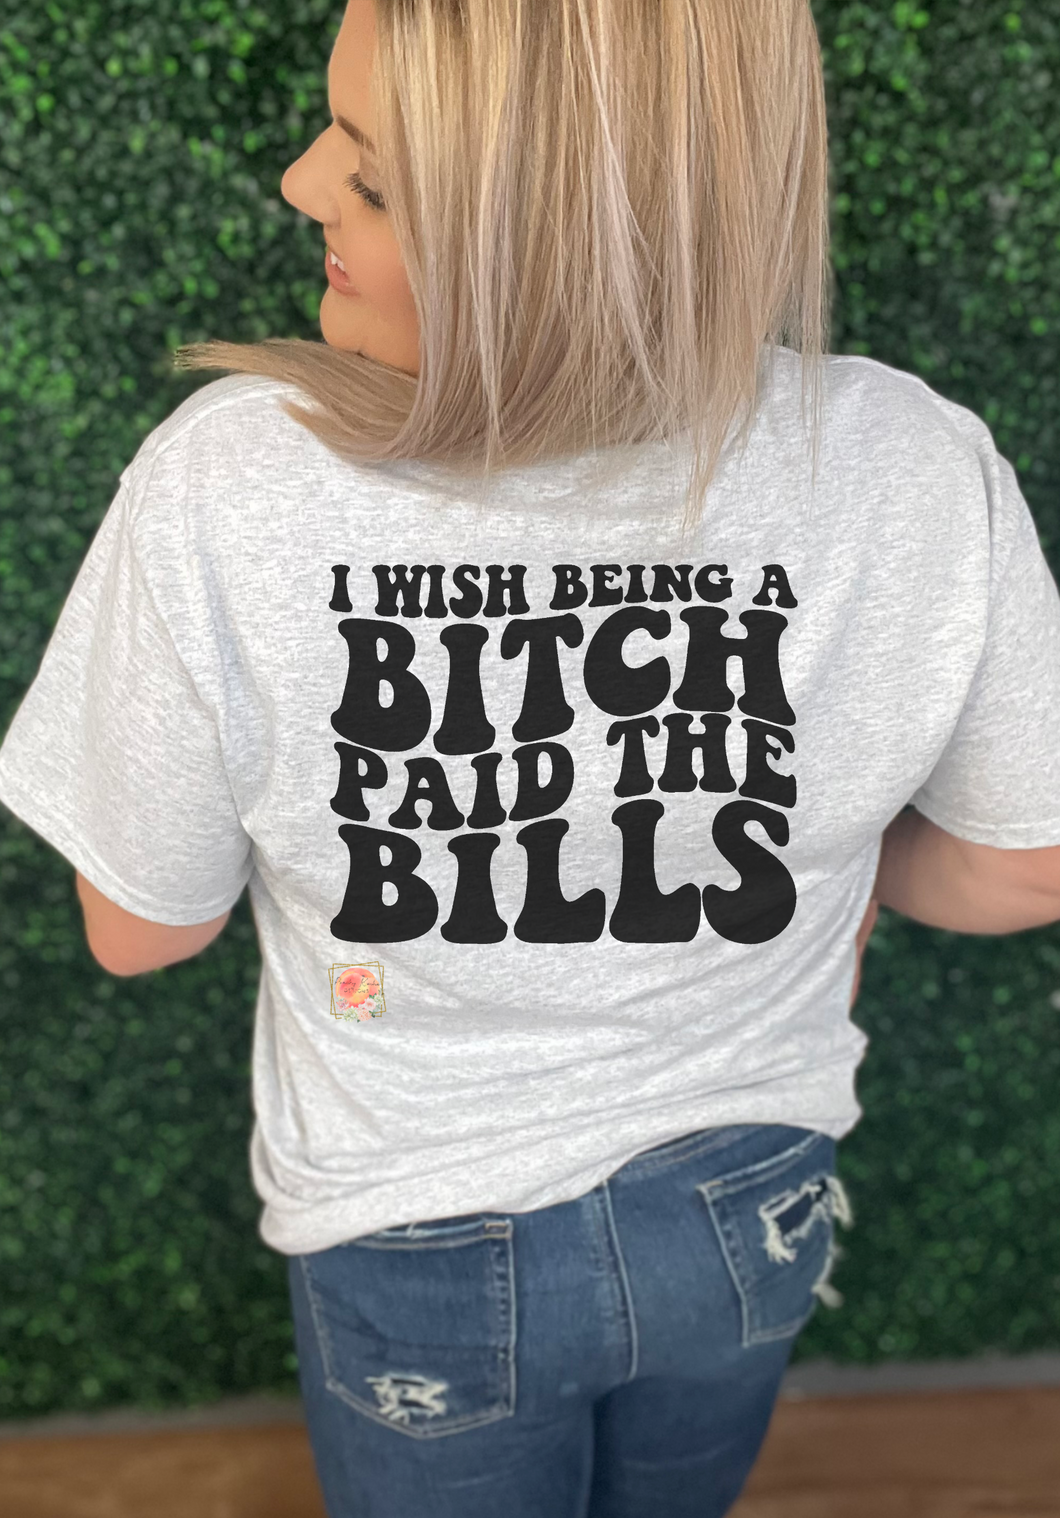 I wish being a bitch paid the bills